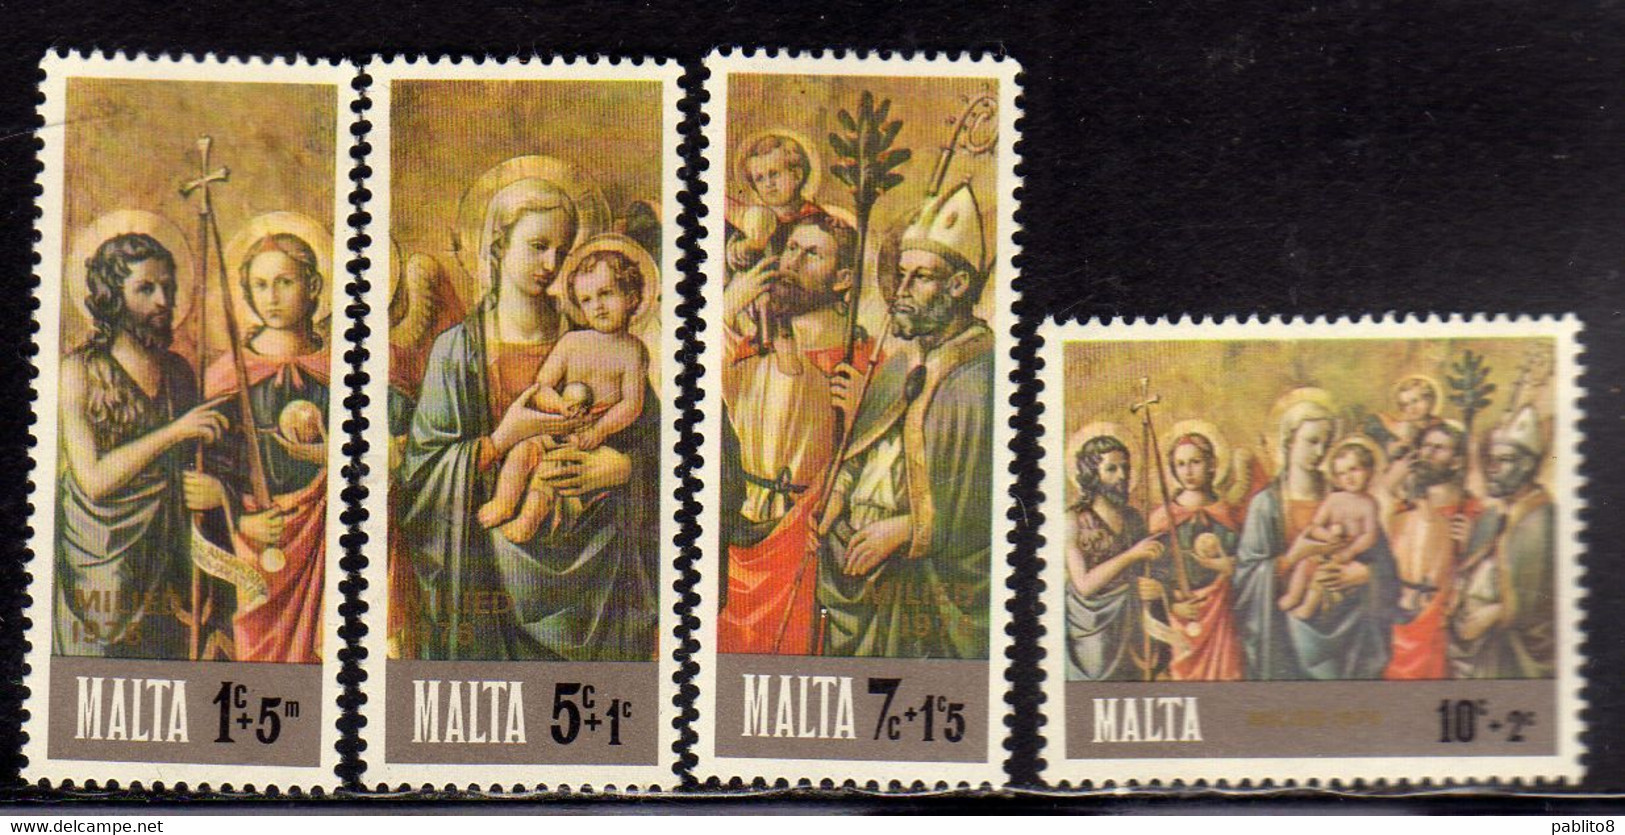 MALTA 1976 CHRISTMAS NATALE NOEL WEIHNACHTEN NAVIDAD NATAL COMPLETE SET SERIE COMPLETA MNH - Malta